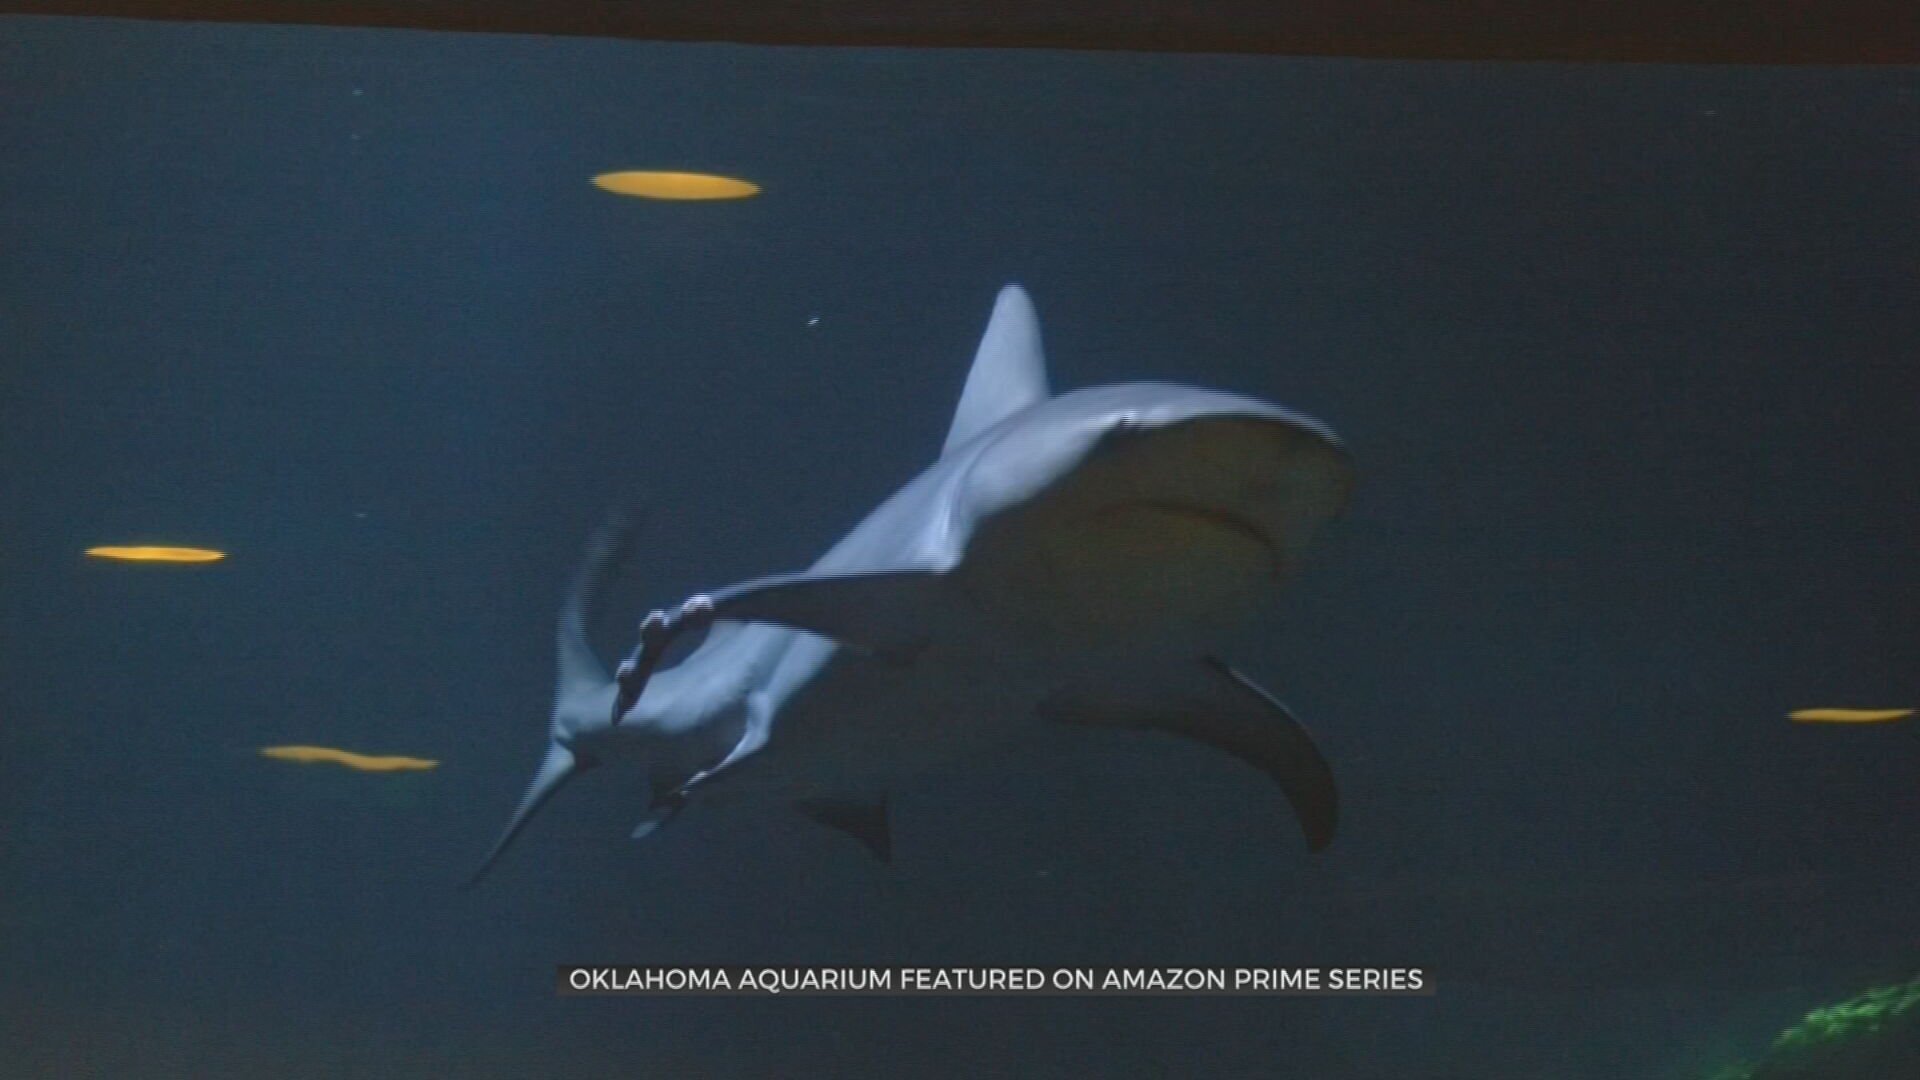 Oklahoma Aquarium’s Bull Sharks To Be Featured On Amazon Prime Series 